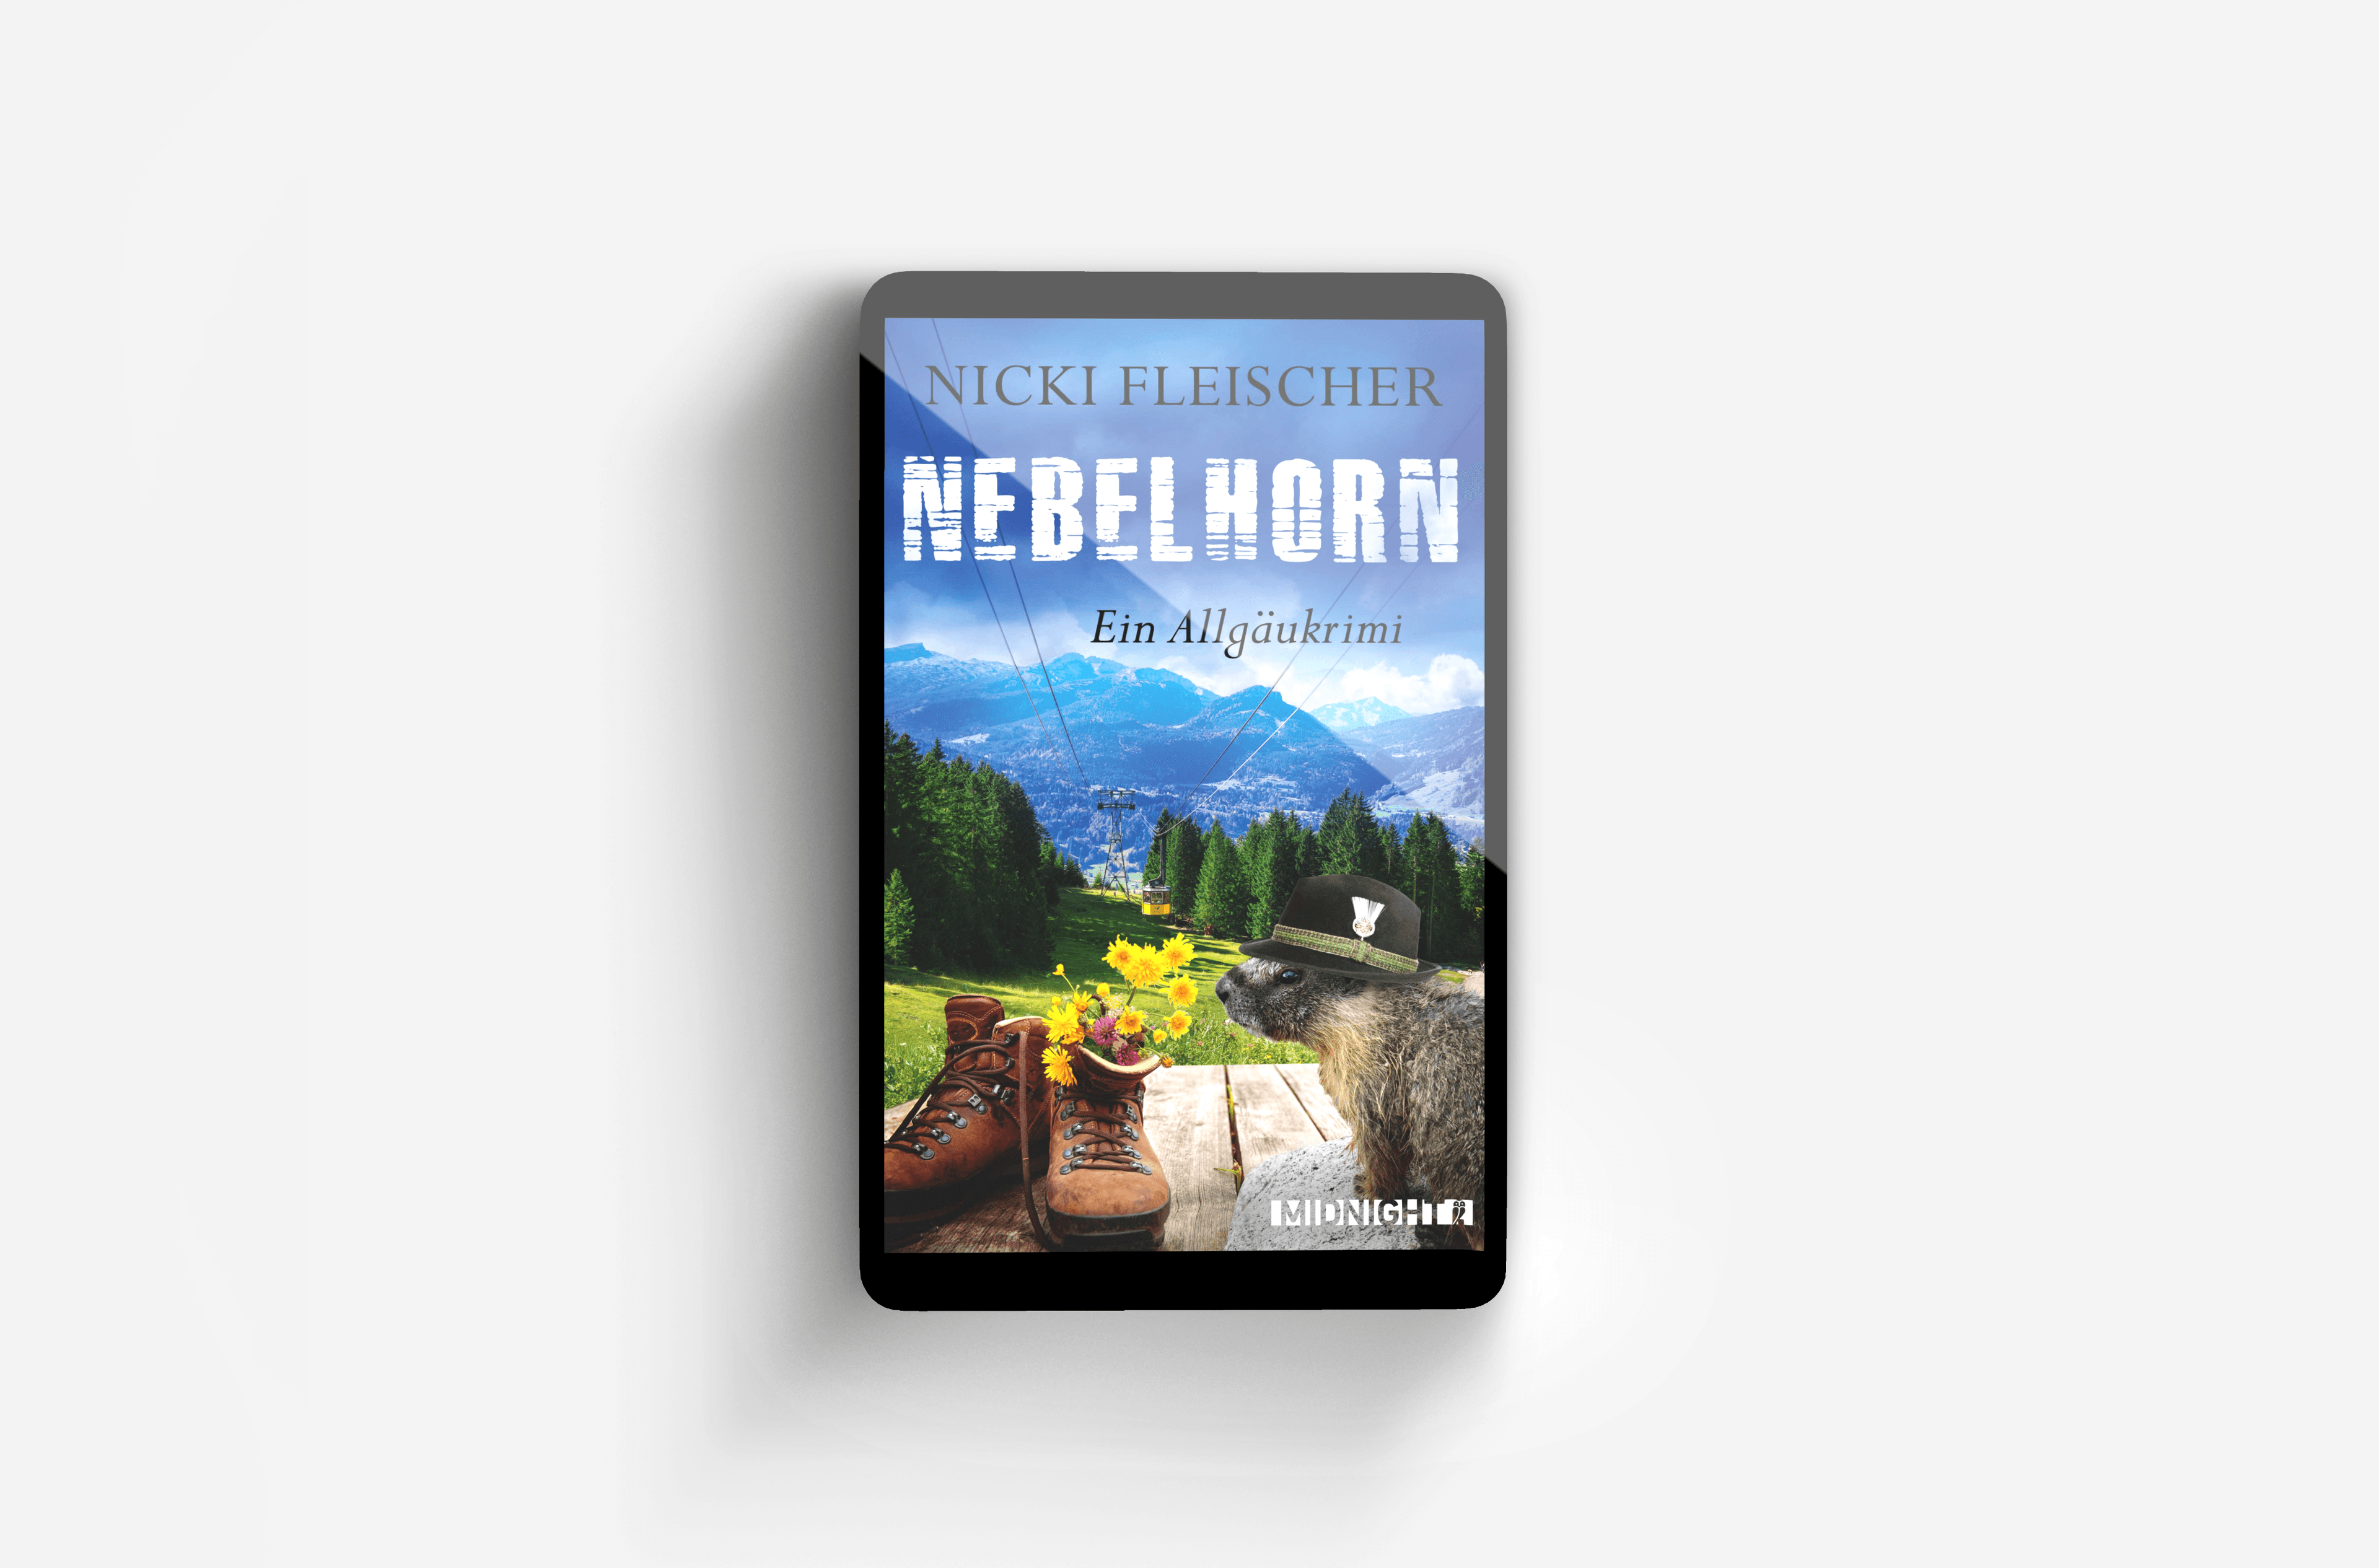 Buchcover von Nebelhorn (Egi-Huber-ermittelt 1)